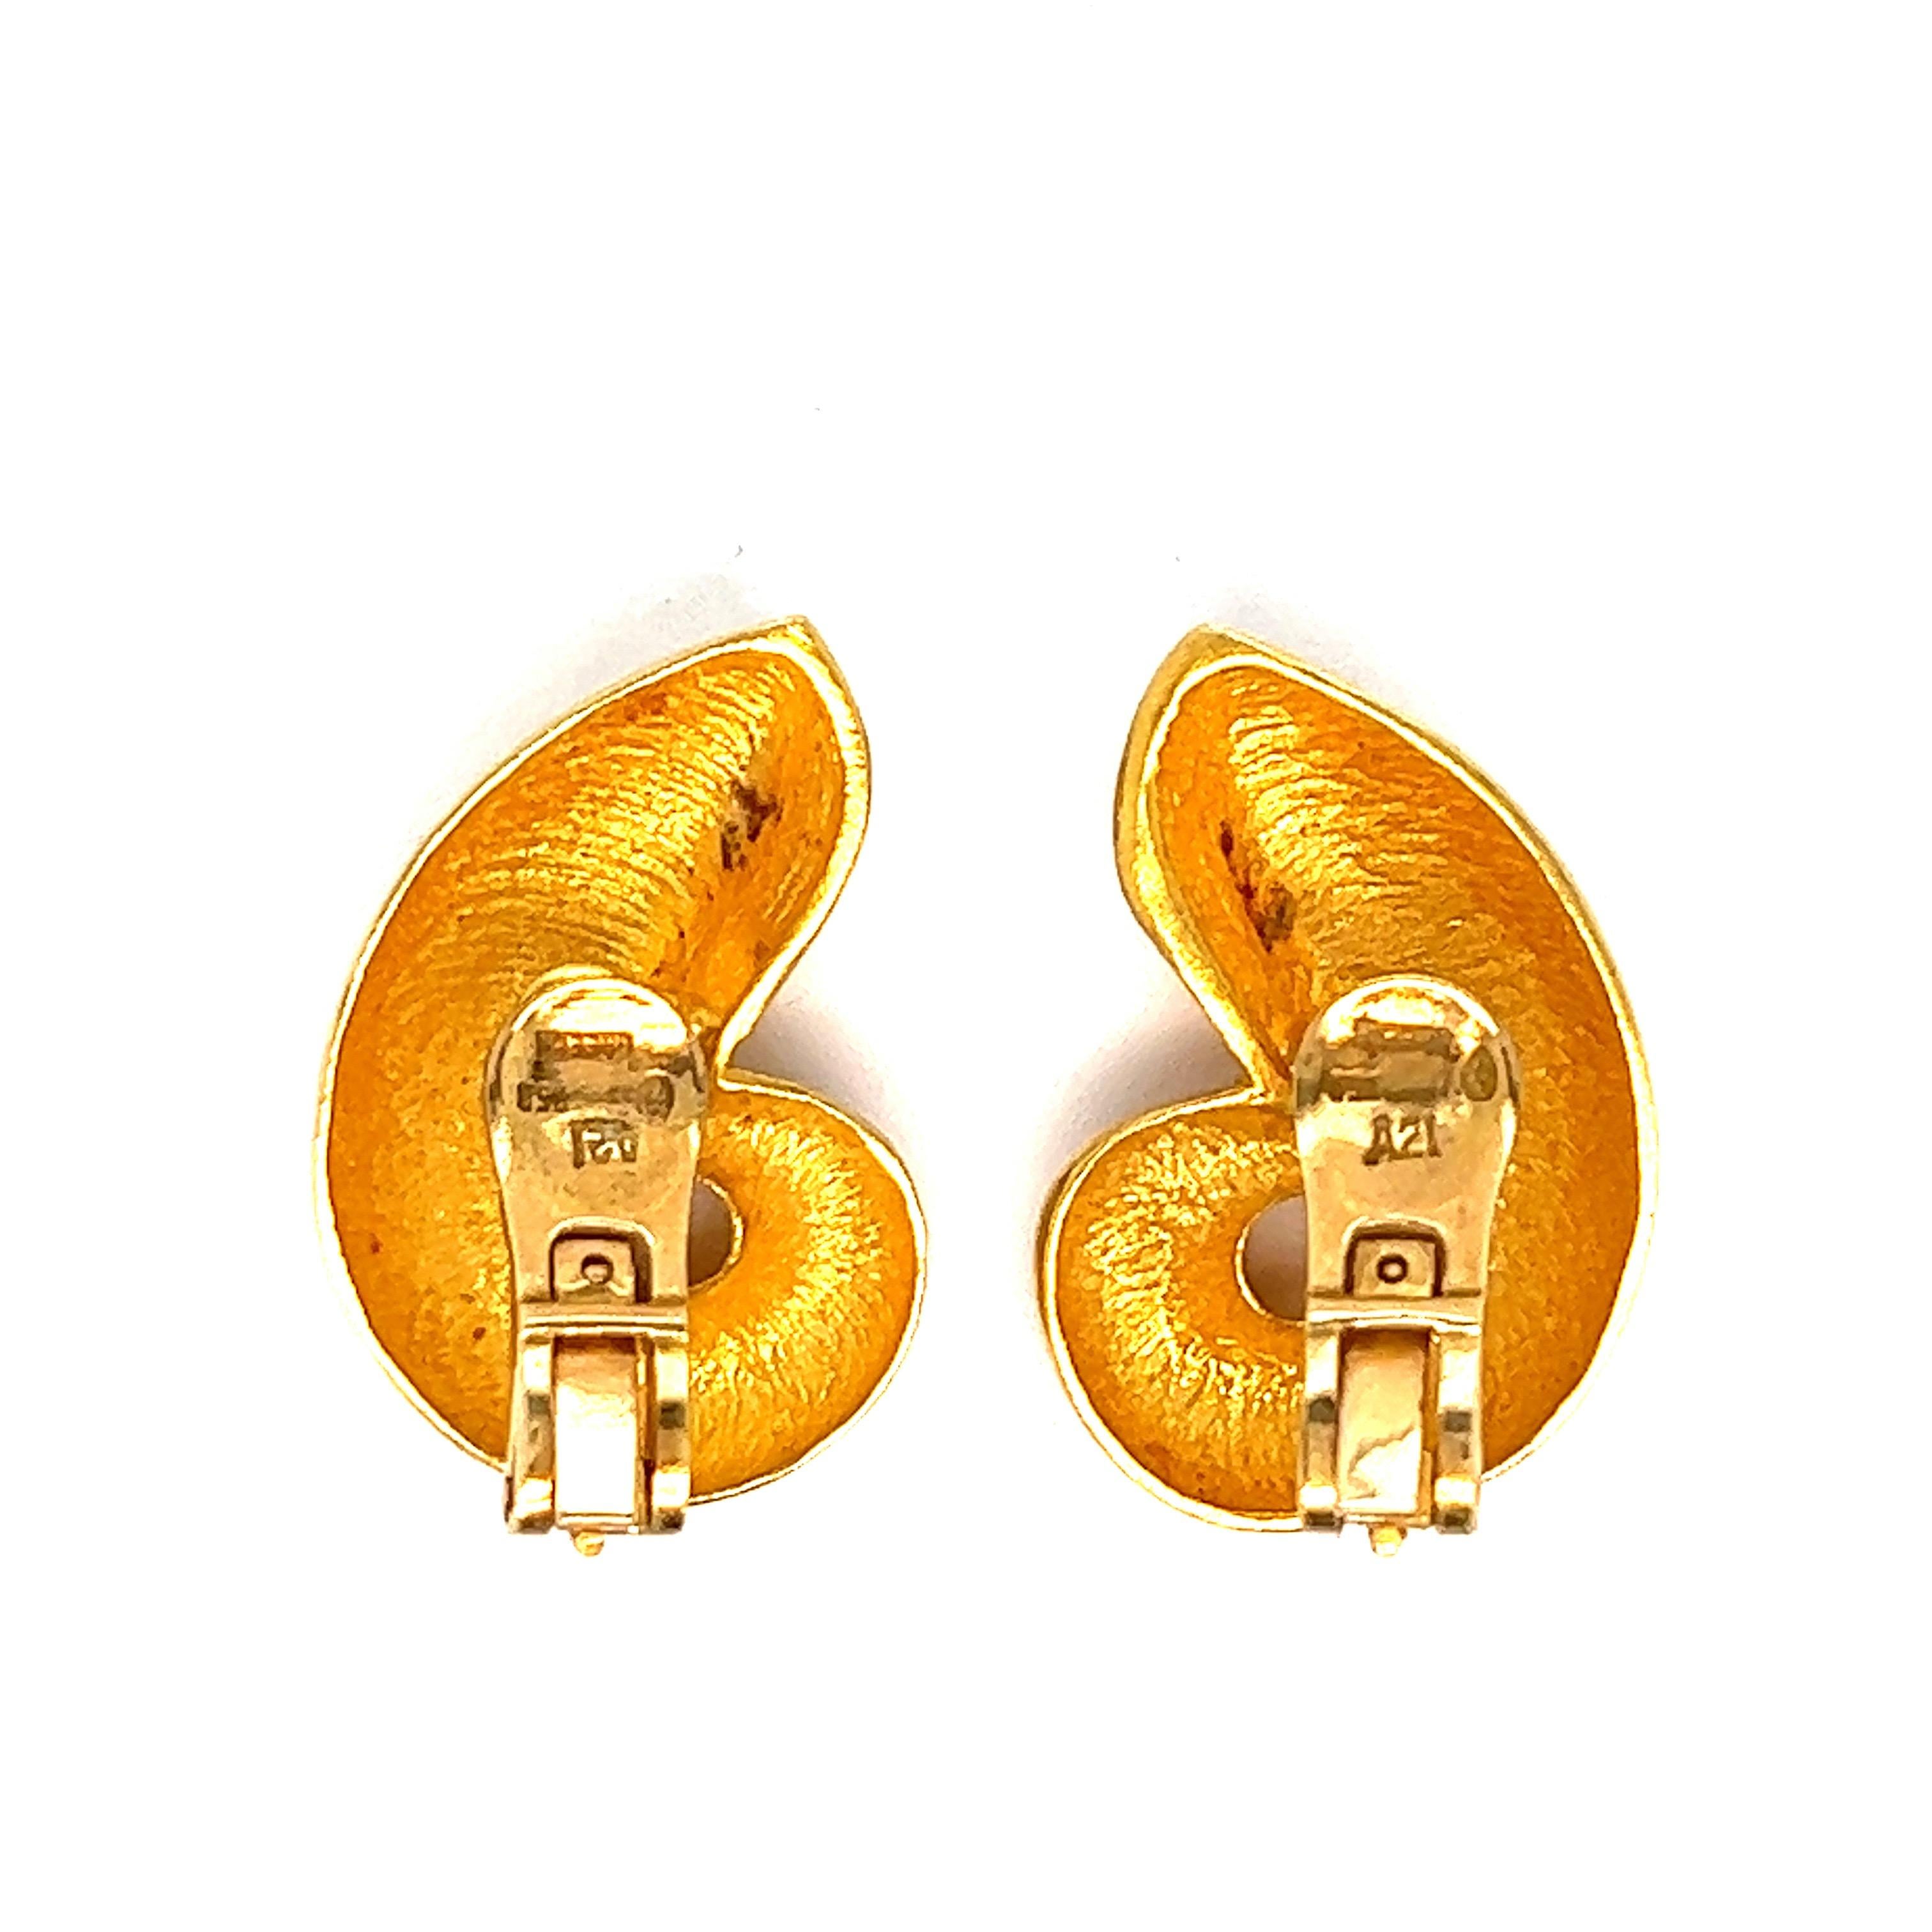 Lalaounis shell gold ear clips

18 karat yellow gold, shell motif; marked Lalaounis hallmark, 750, Greece

Size: width 2 cm, length 3 cm
Total weight: 19.8 grams